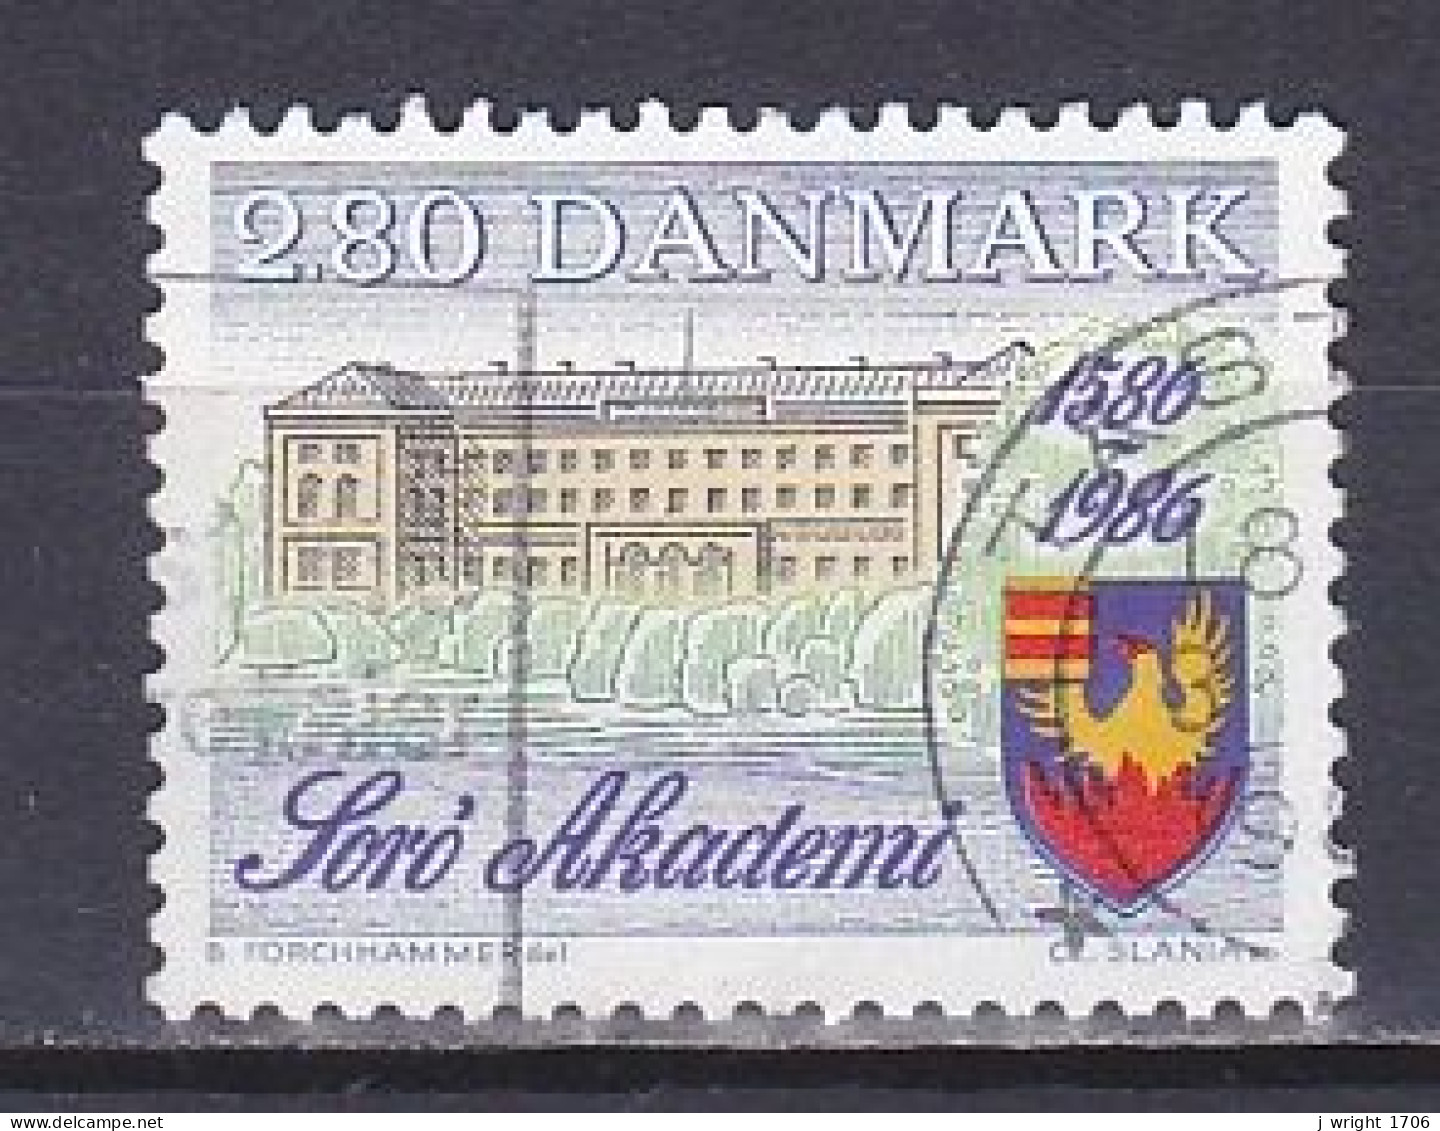 Denmark, 1986, Sorö Academy 400th Anniv, 2.80kr, USED - Gebraucht